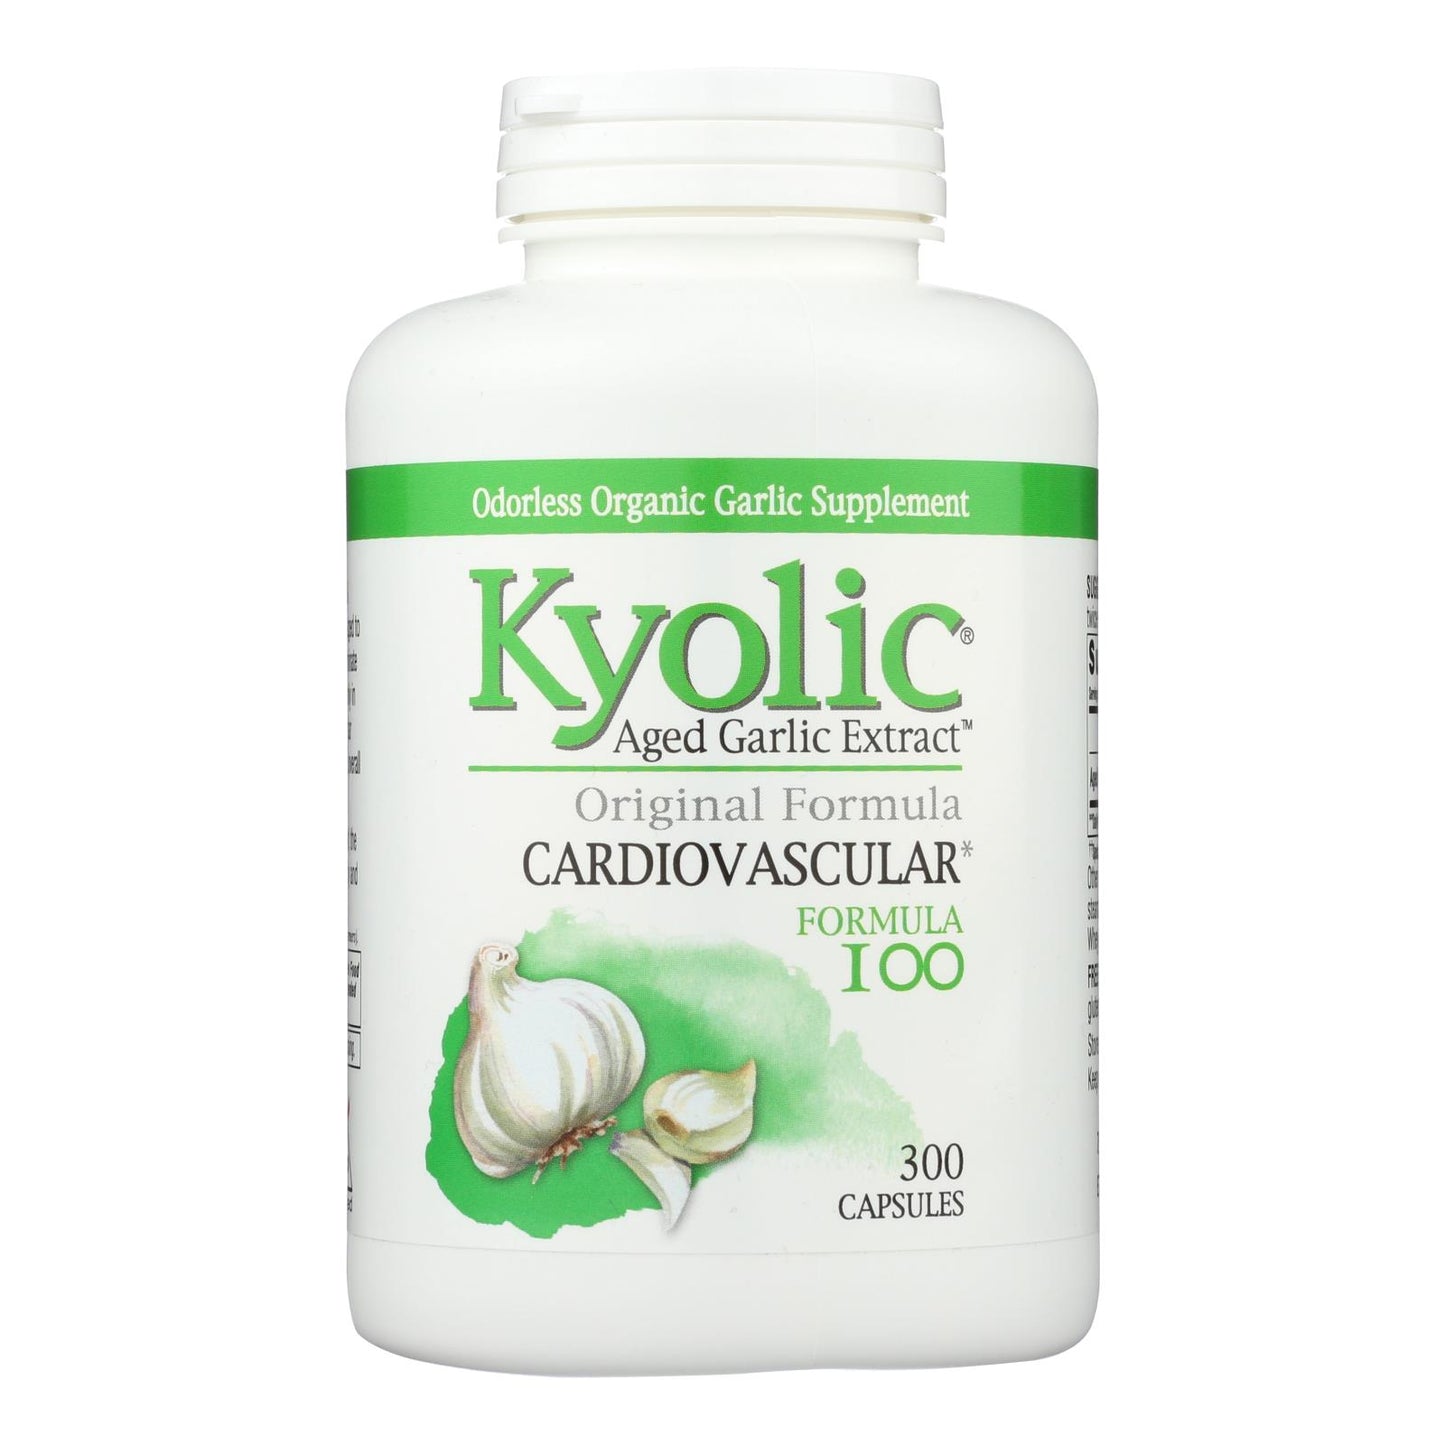 
                  
                    Kyolic Aged Garlic Extract Cardiovascular Original Formula 100, 300 Capsules
                  
                